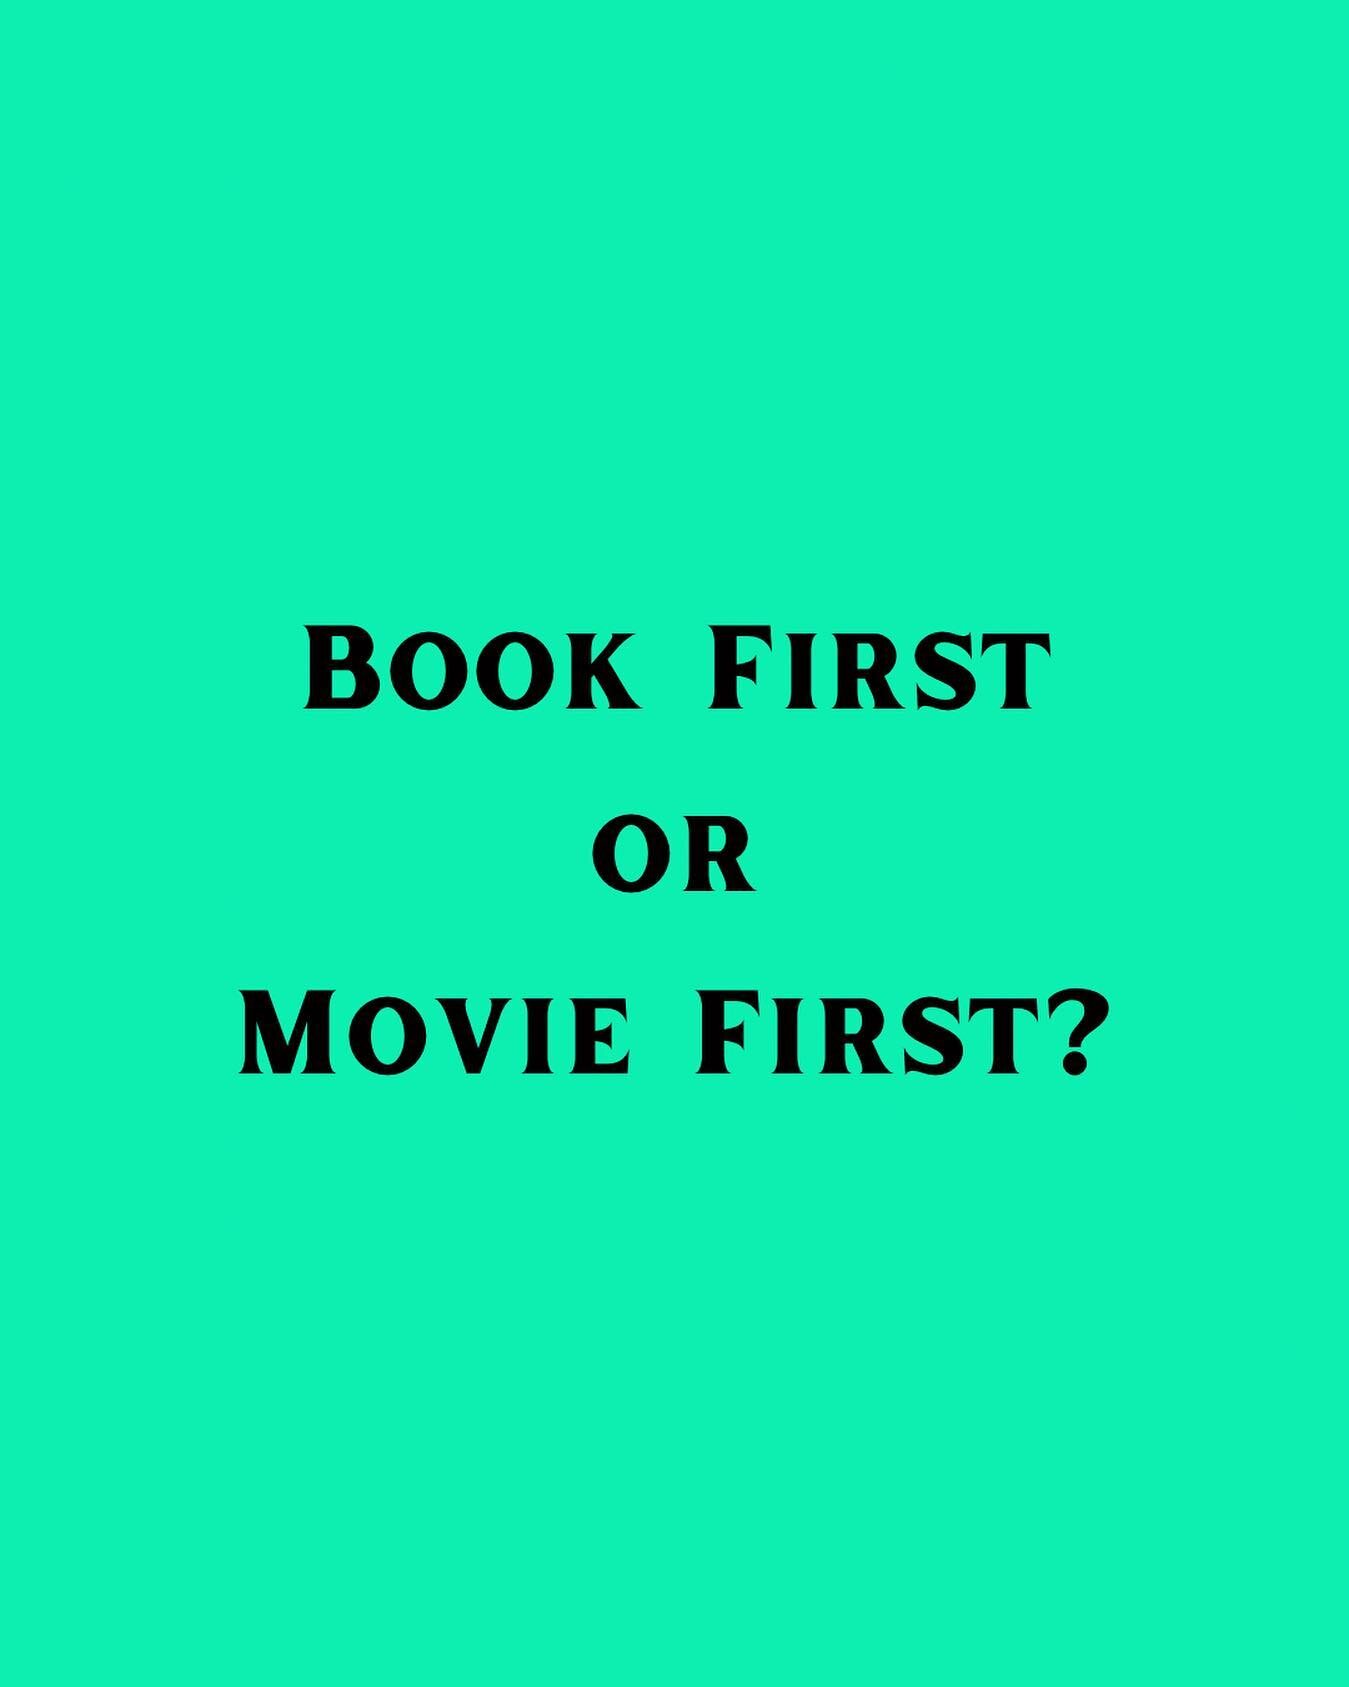 Do you have an opinion on this?
📚 vs 🎥 
🍿 
#BookOrMovieFirst #BookVsMovie #BooksOrMovies #BasedOnABook